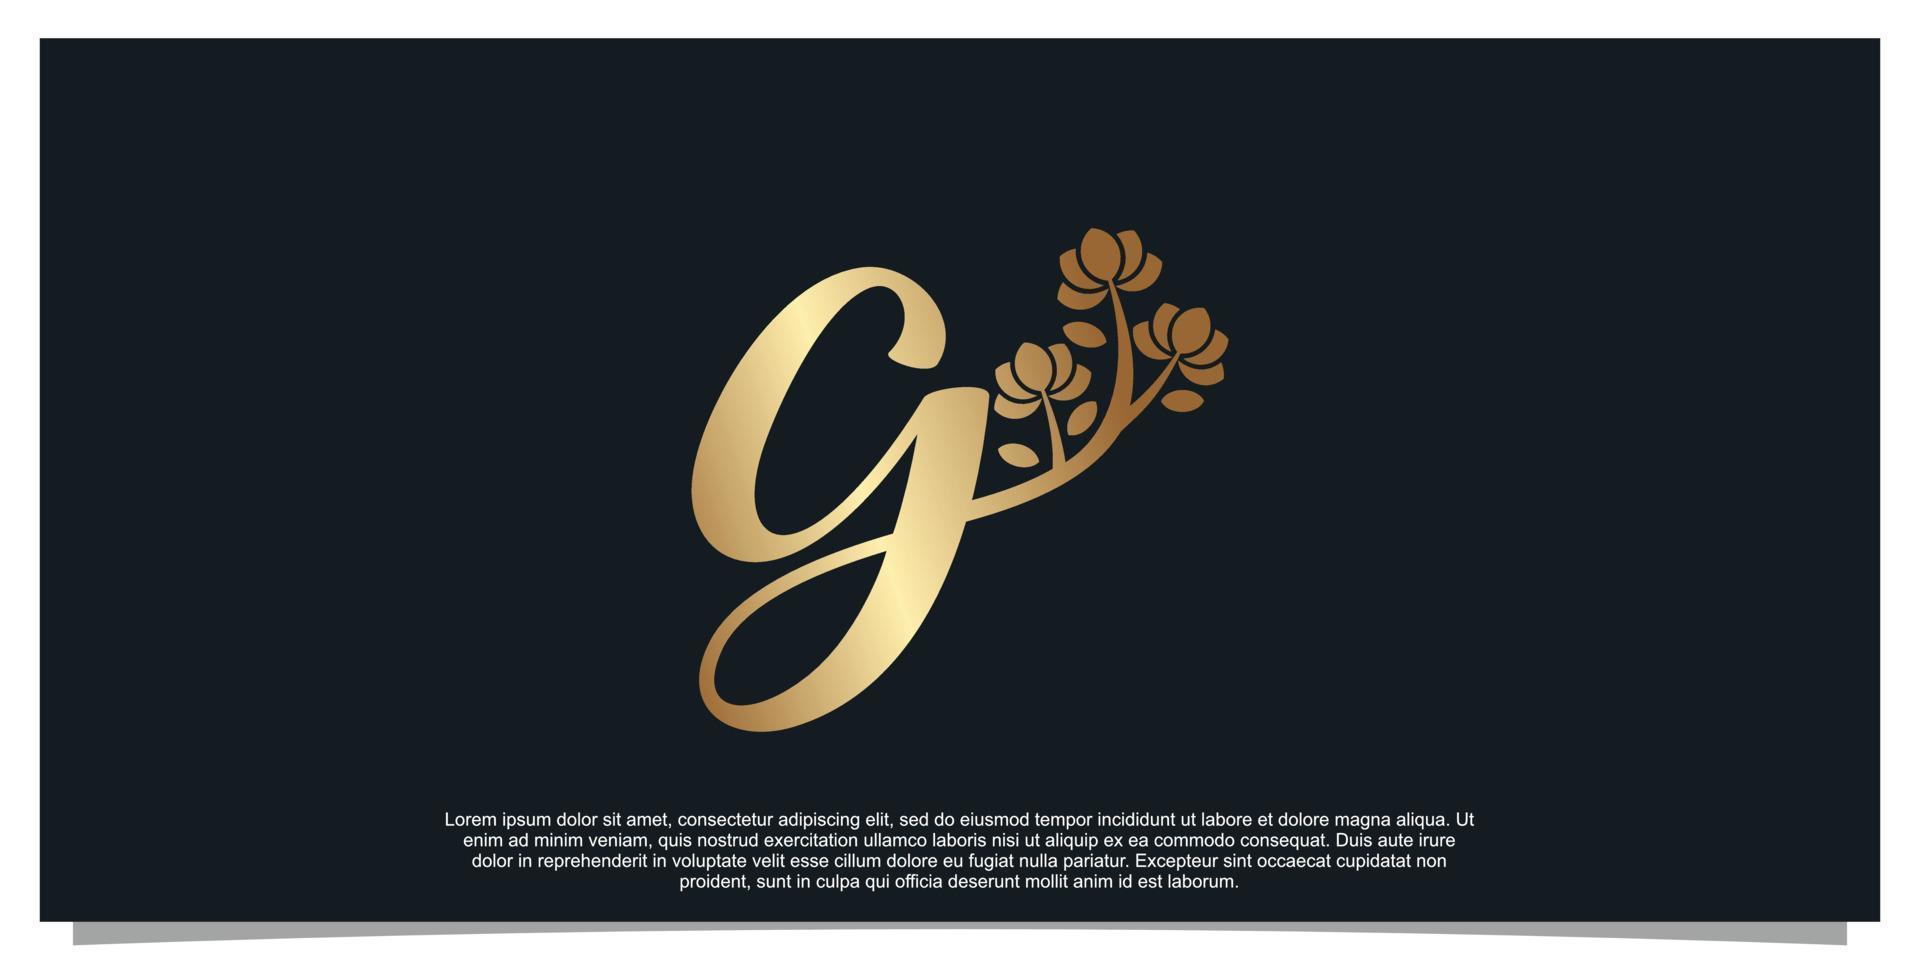 letra g de design de logotipo com vetor premium de conceito exclusivo de flor